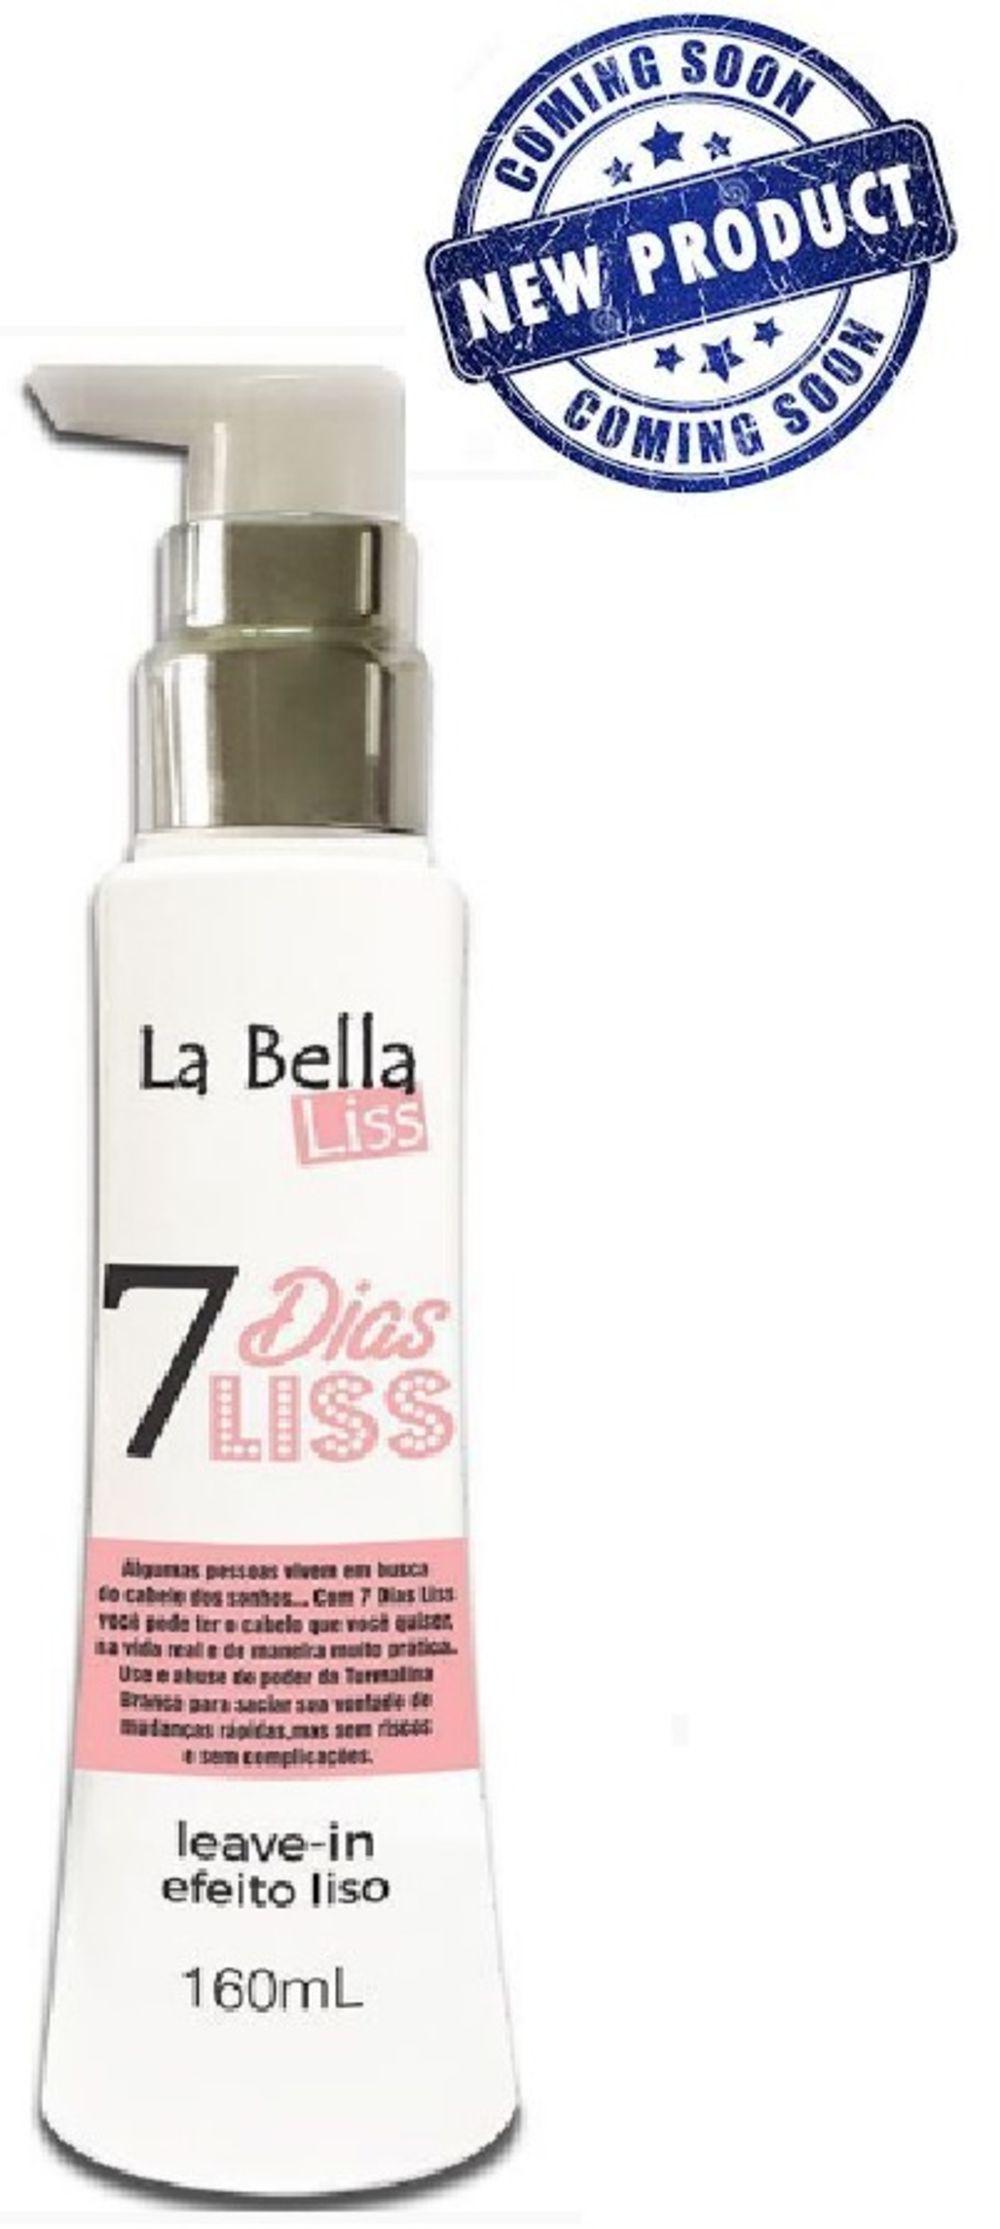 La Bella Liss 7 Dias Liss Leave-In Efeito Liso - 160ml é bom? Vale a pena?